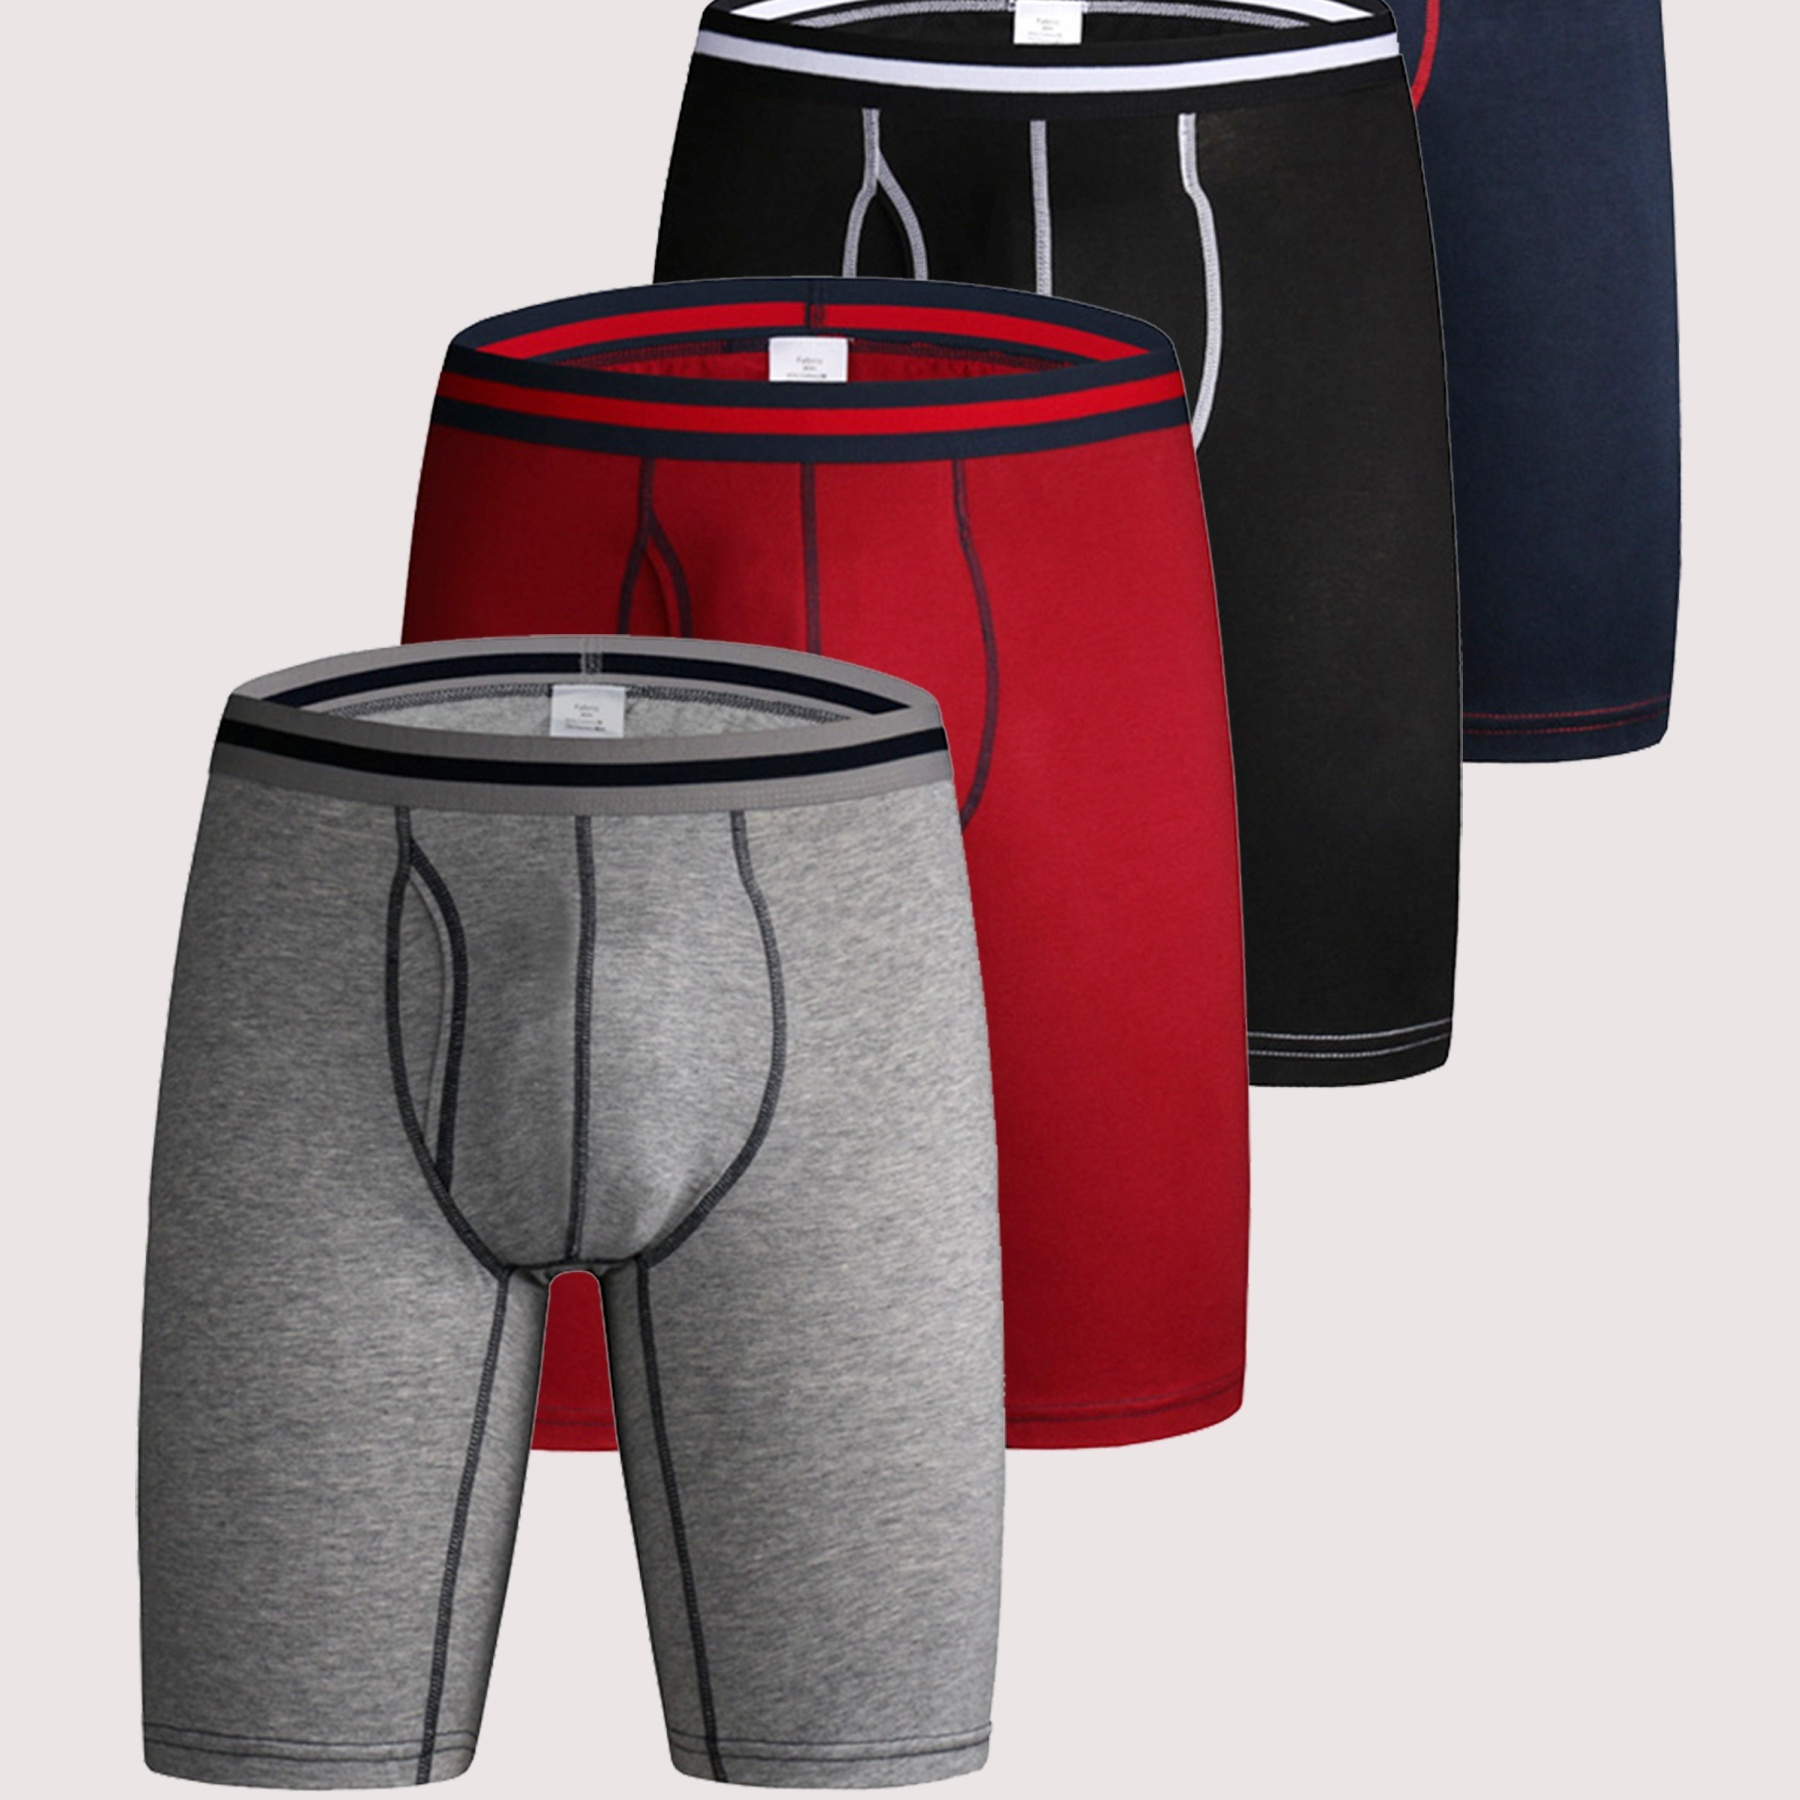 

4pcs Men's Long Boxer Briefs Shorts, Cotton Comfortable Breathable Skin-friendly Sports Boxer Trunks, Men's Underwear With Fly